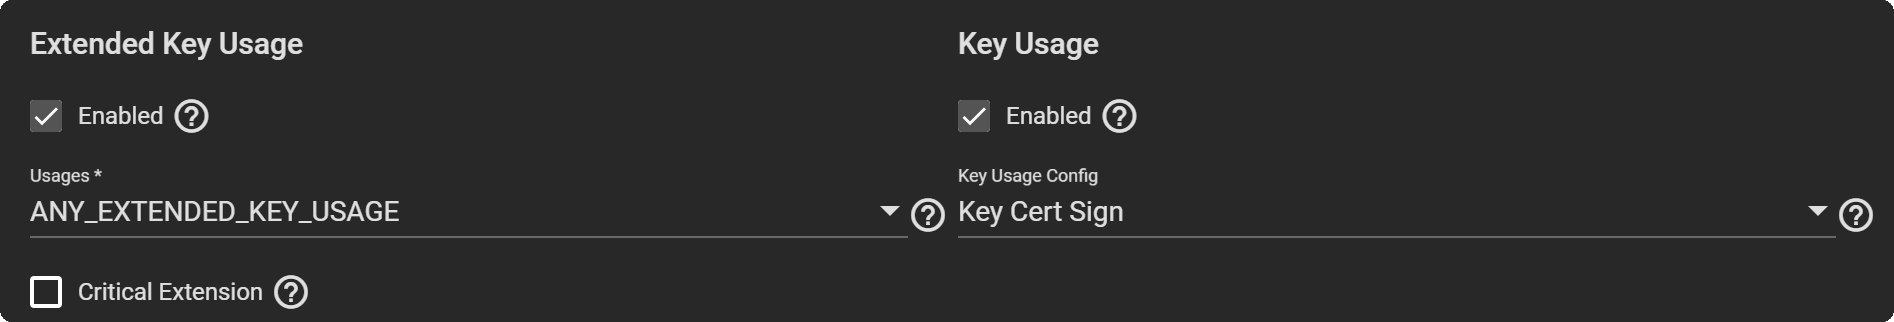 Create CSA Key Usage